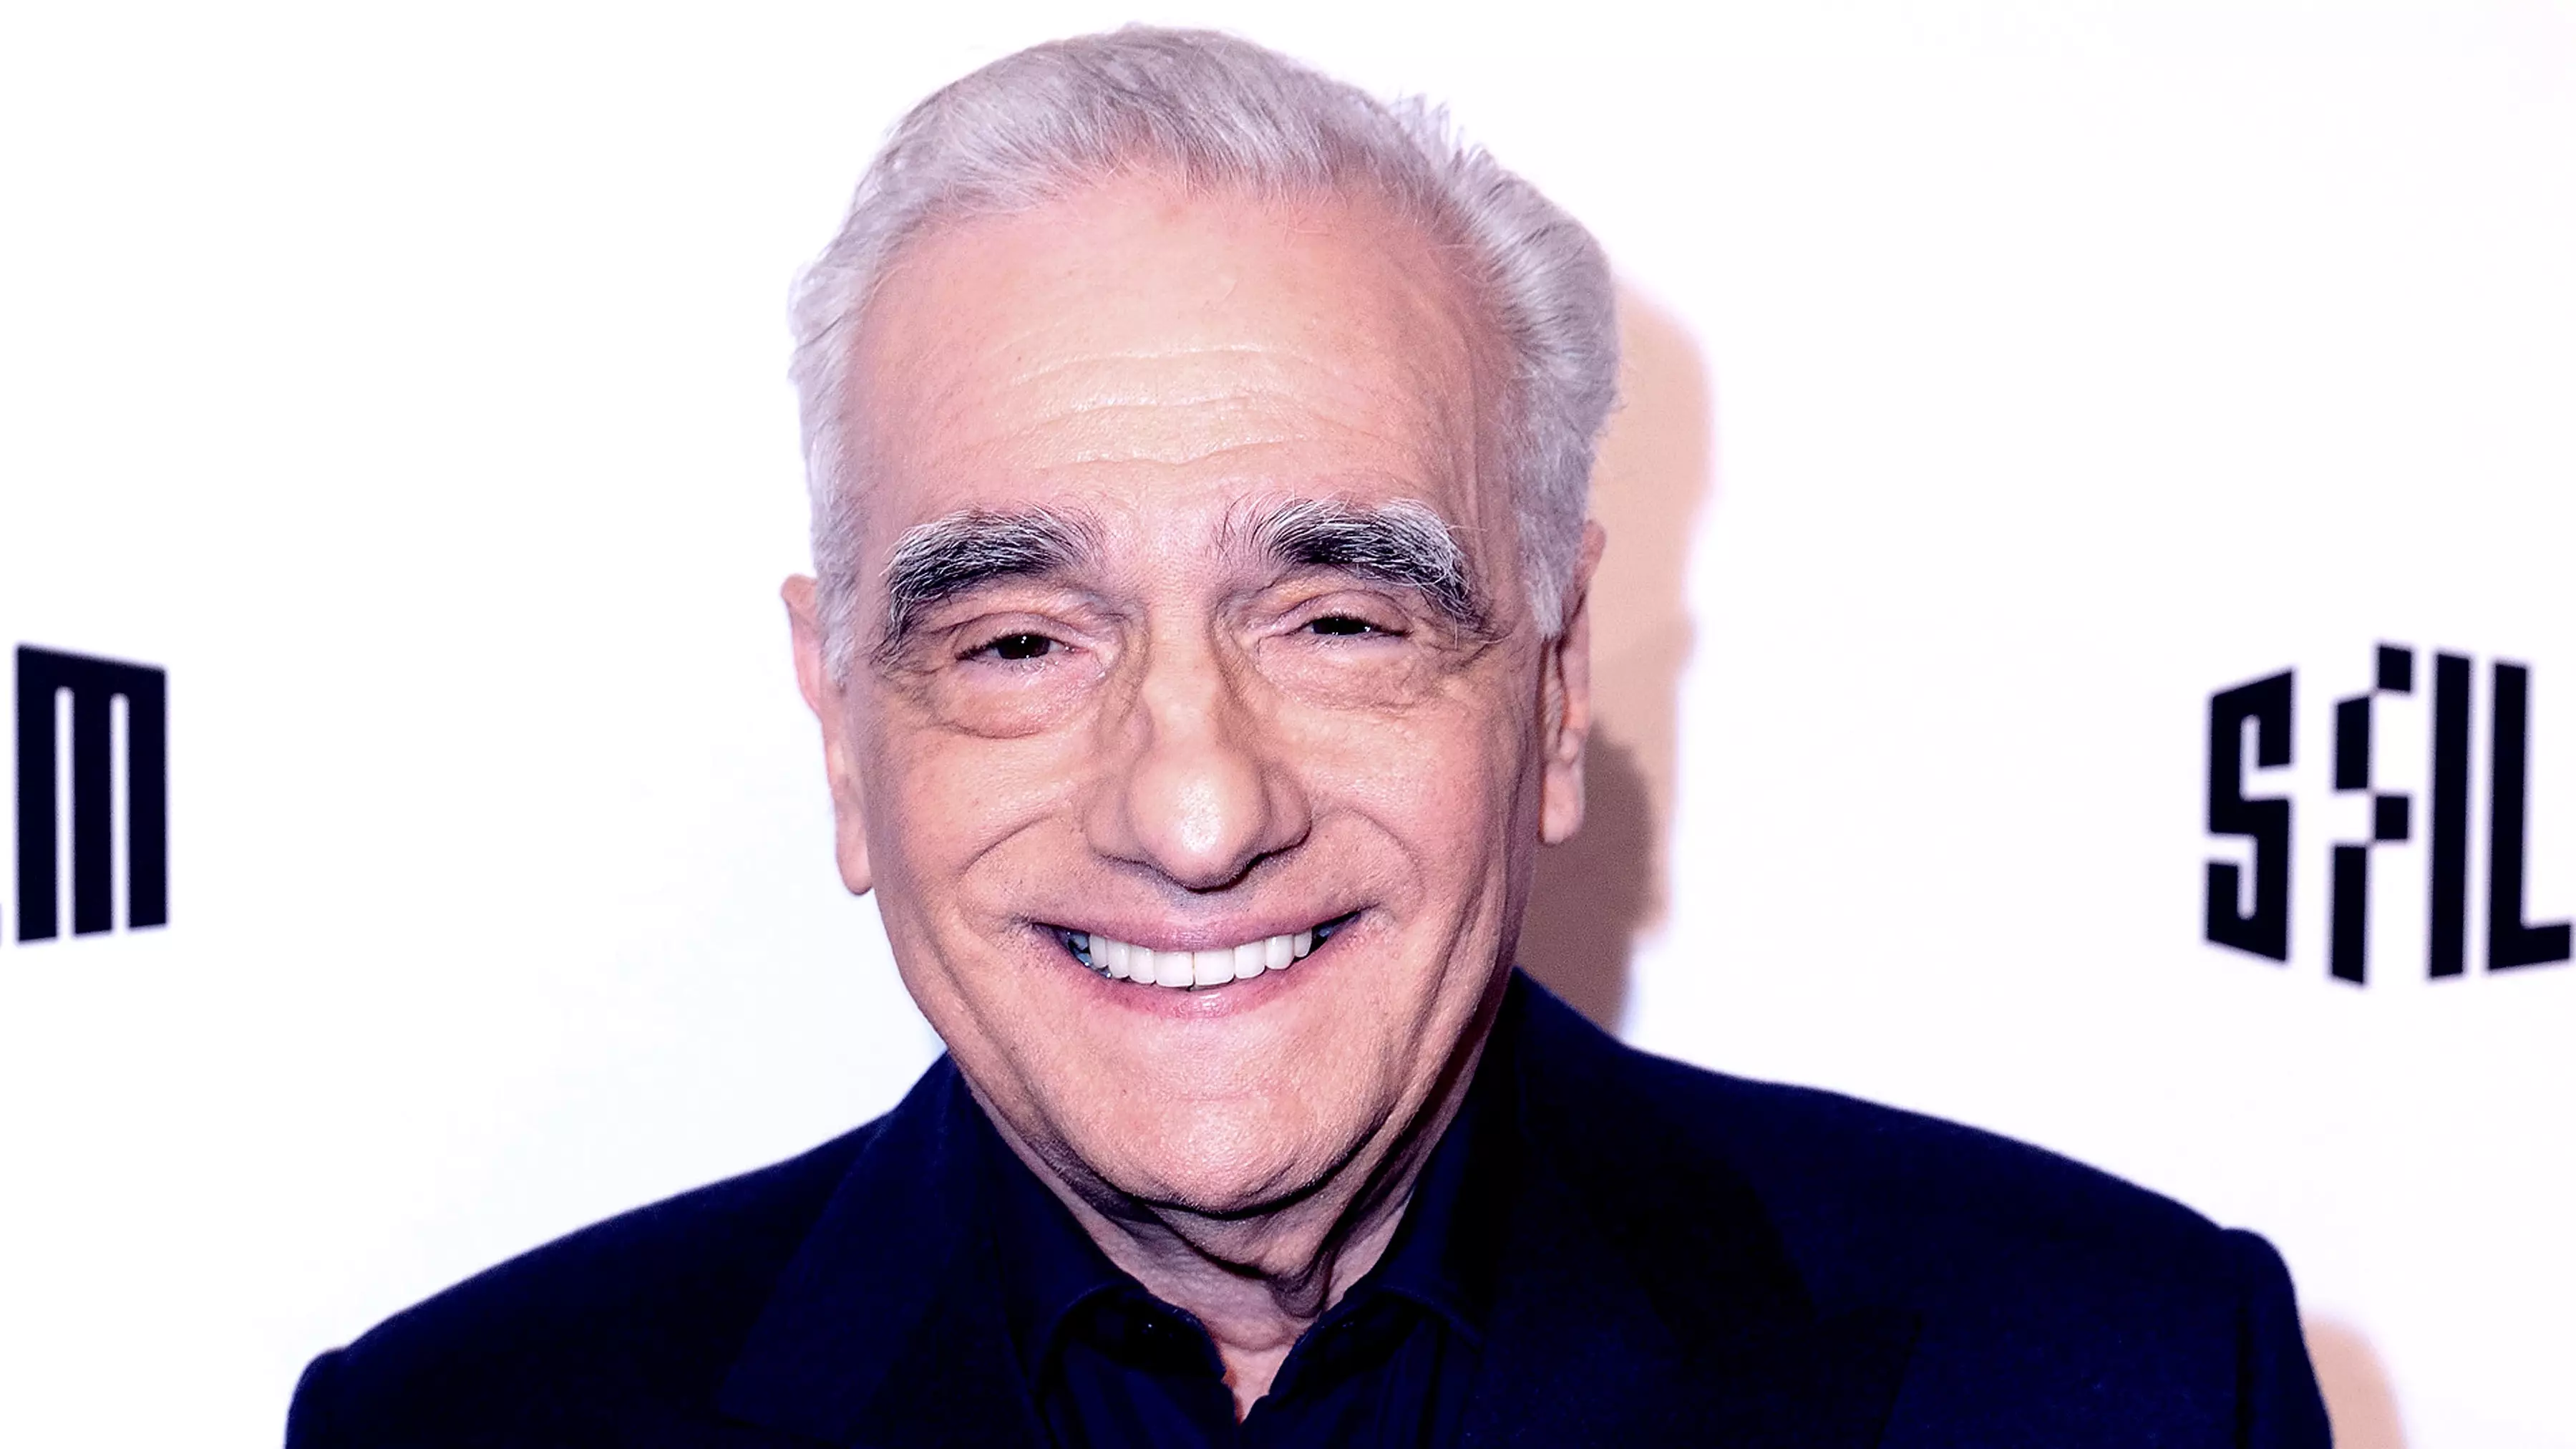 Martin Scorsese Making Documentary About 1970s New York Music Scene